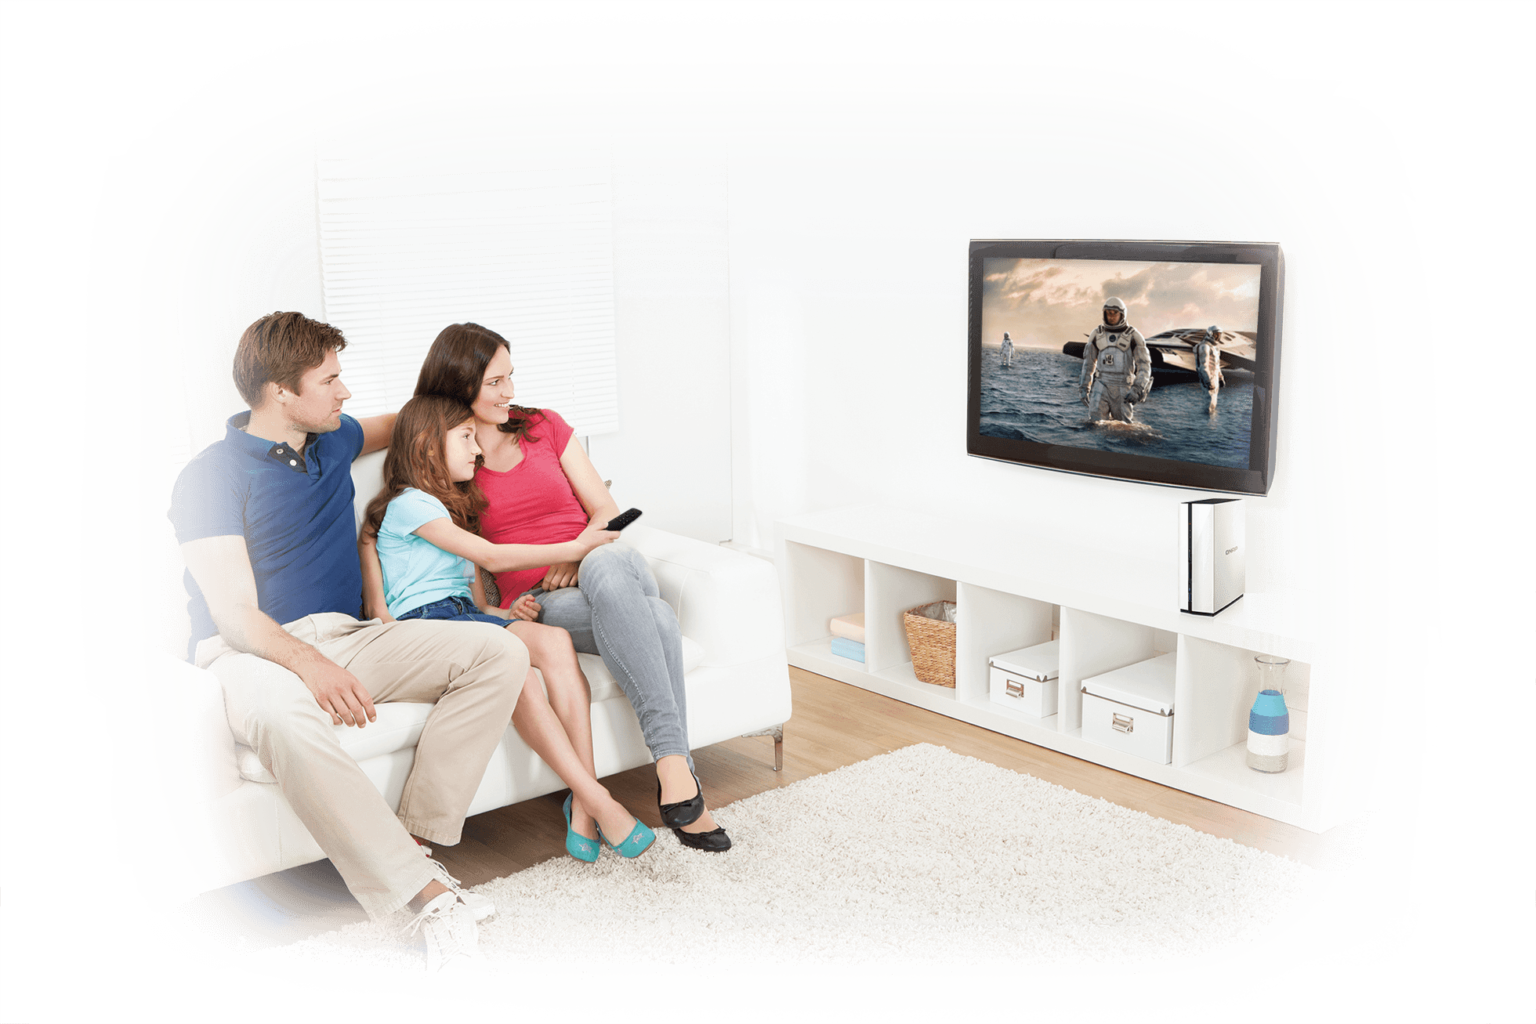 Семья у телевизора. Человек перед телевизором. Семья за телевизором. Счастливая семья у телевизора.